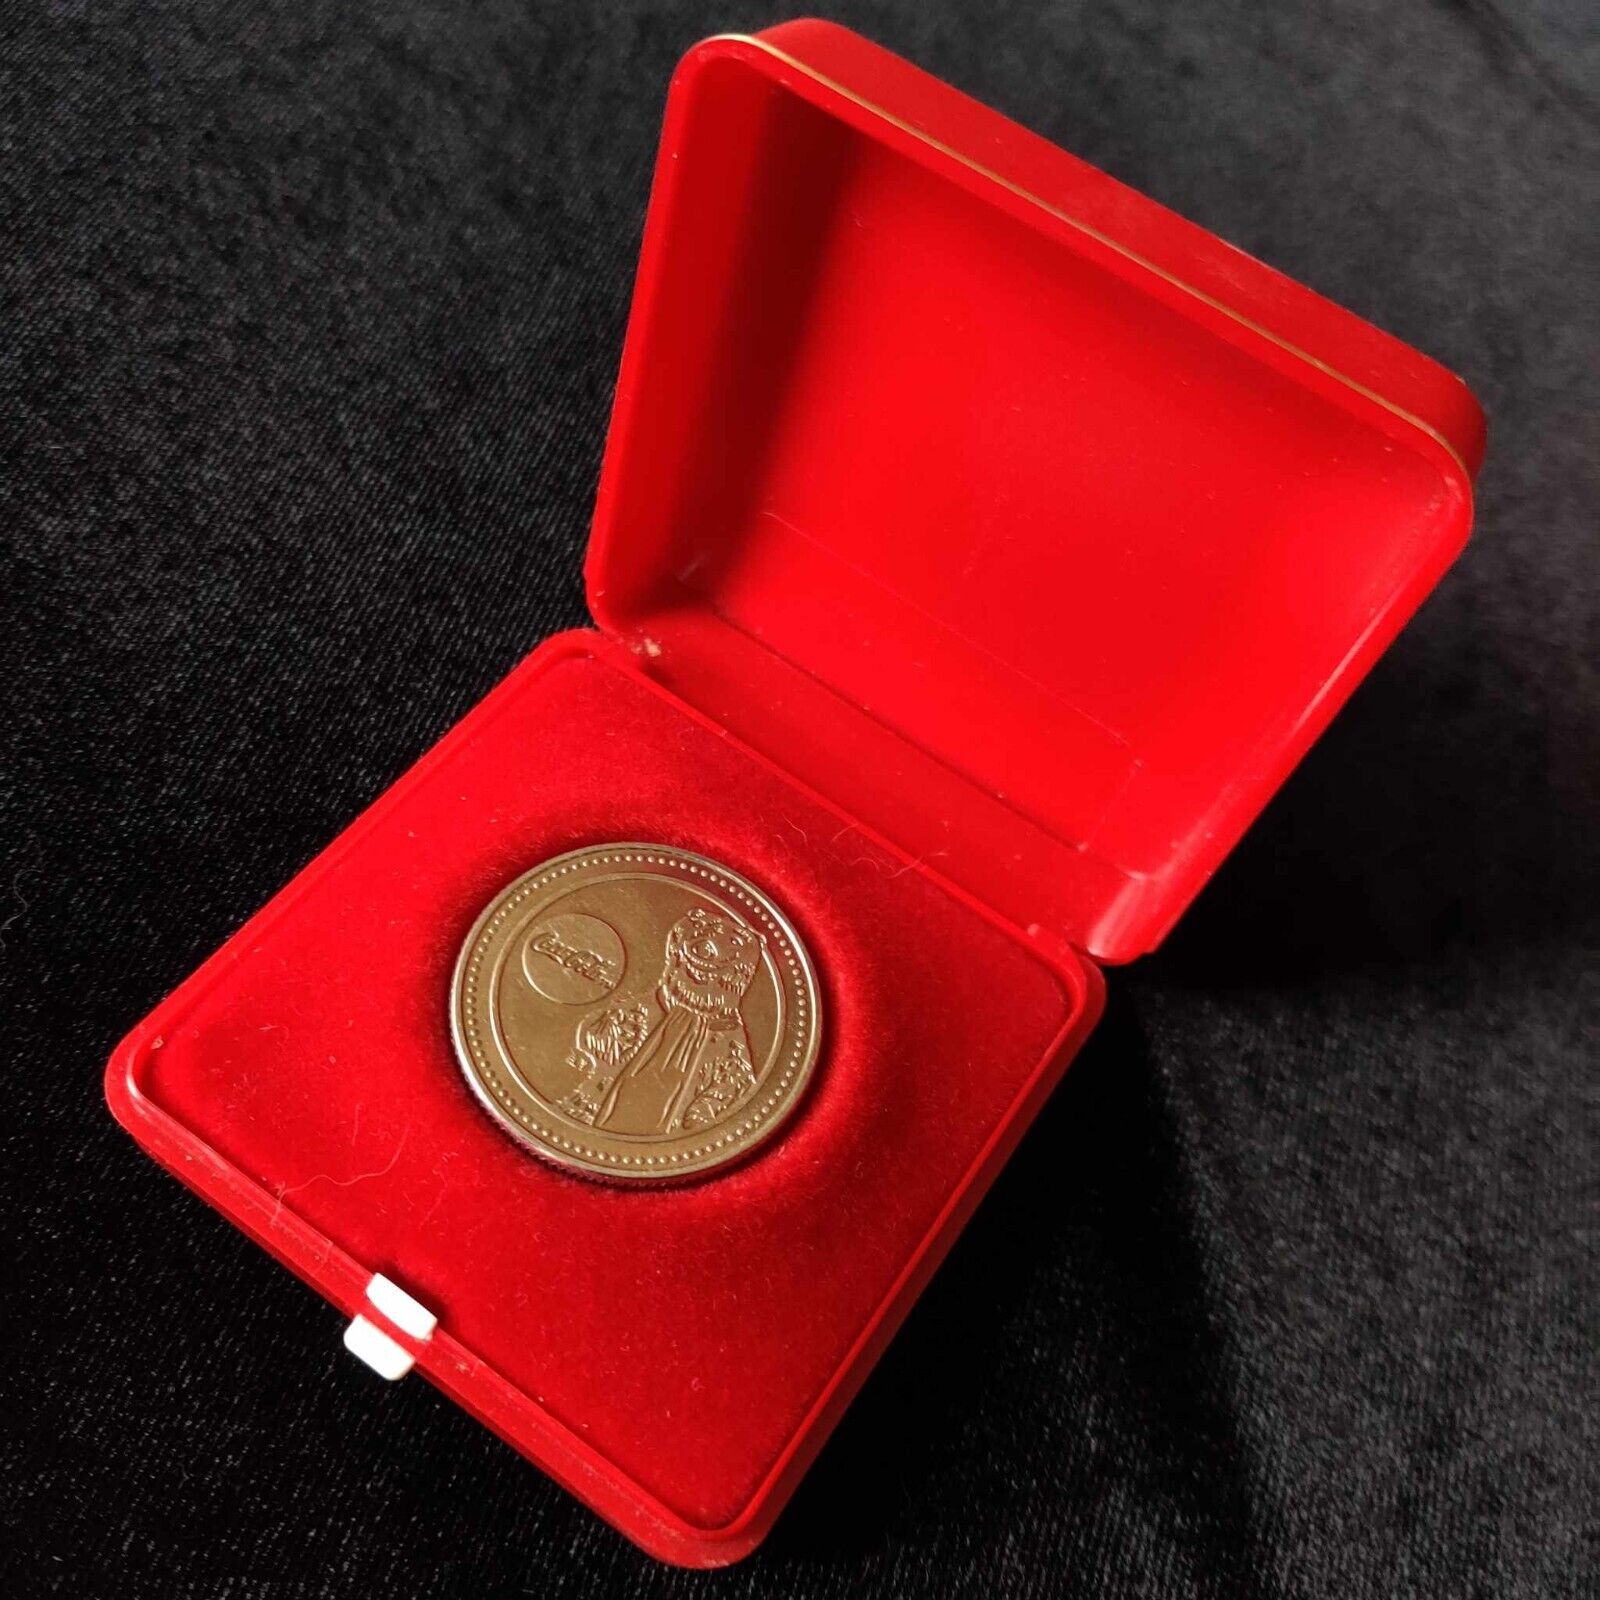 Collectable World of Coca Cola Silver Coin in original box - VERY GOOD COND